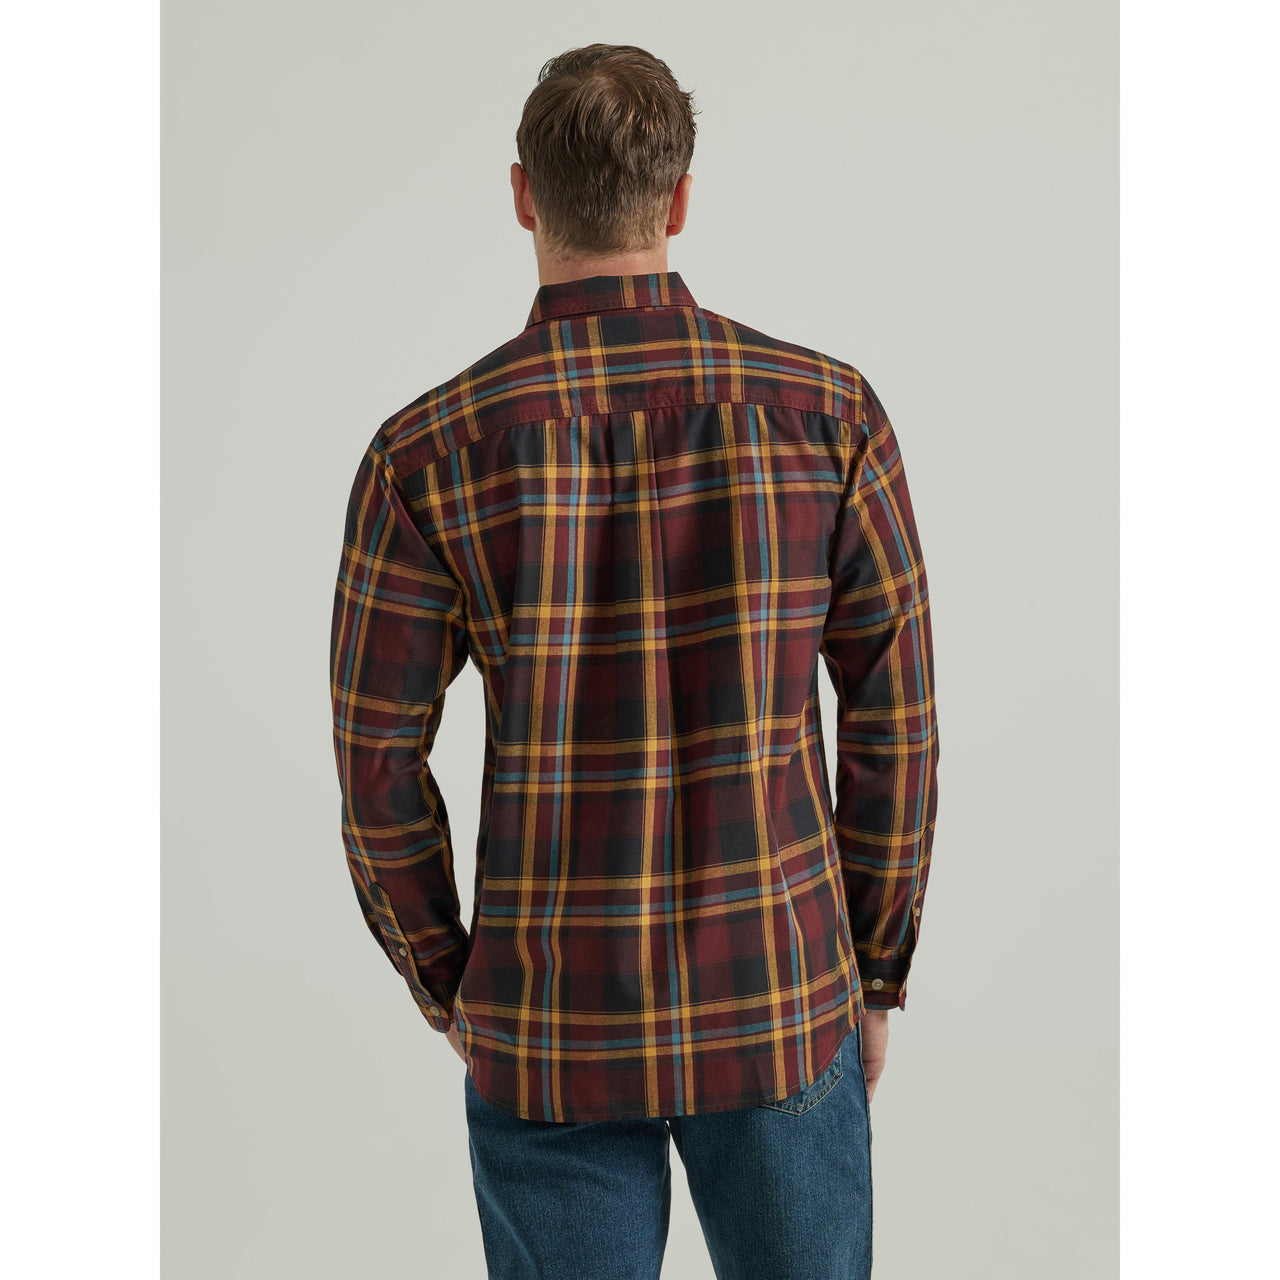 Wrangler Rugged Wear Blue Ridge Plaid Long Sleeve Shirt - Burgundy